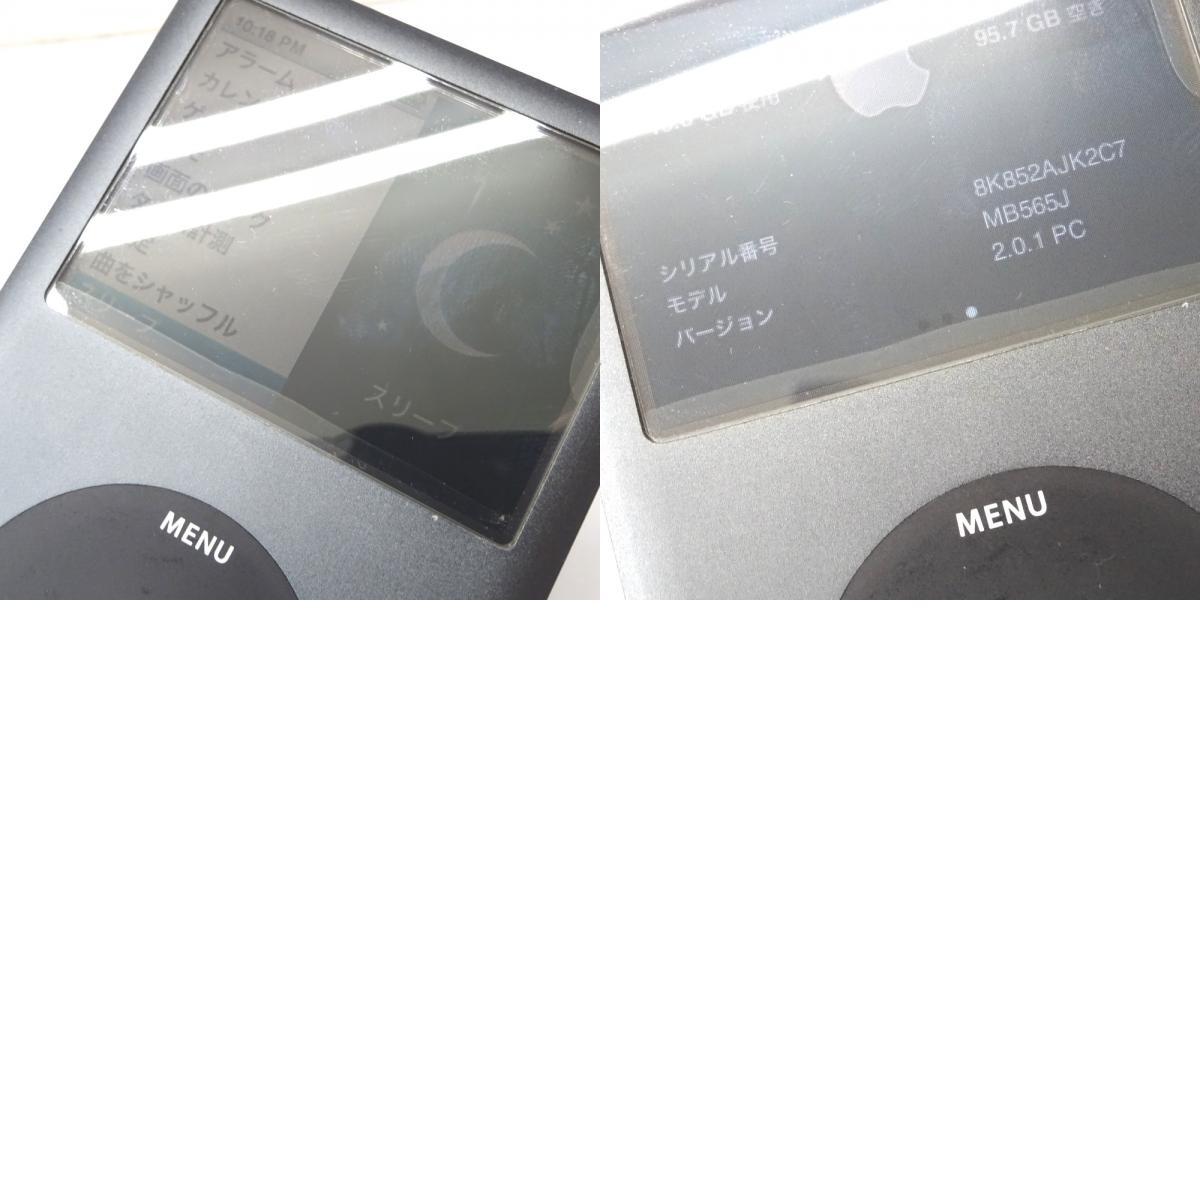 Ft1183941 アップル デジタルオーディオプレイヤー 120GB iPod classic MB565J/A Apple 中古_画像10